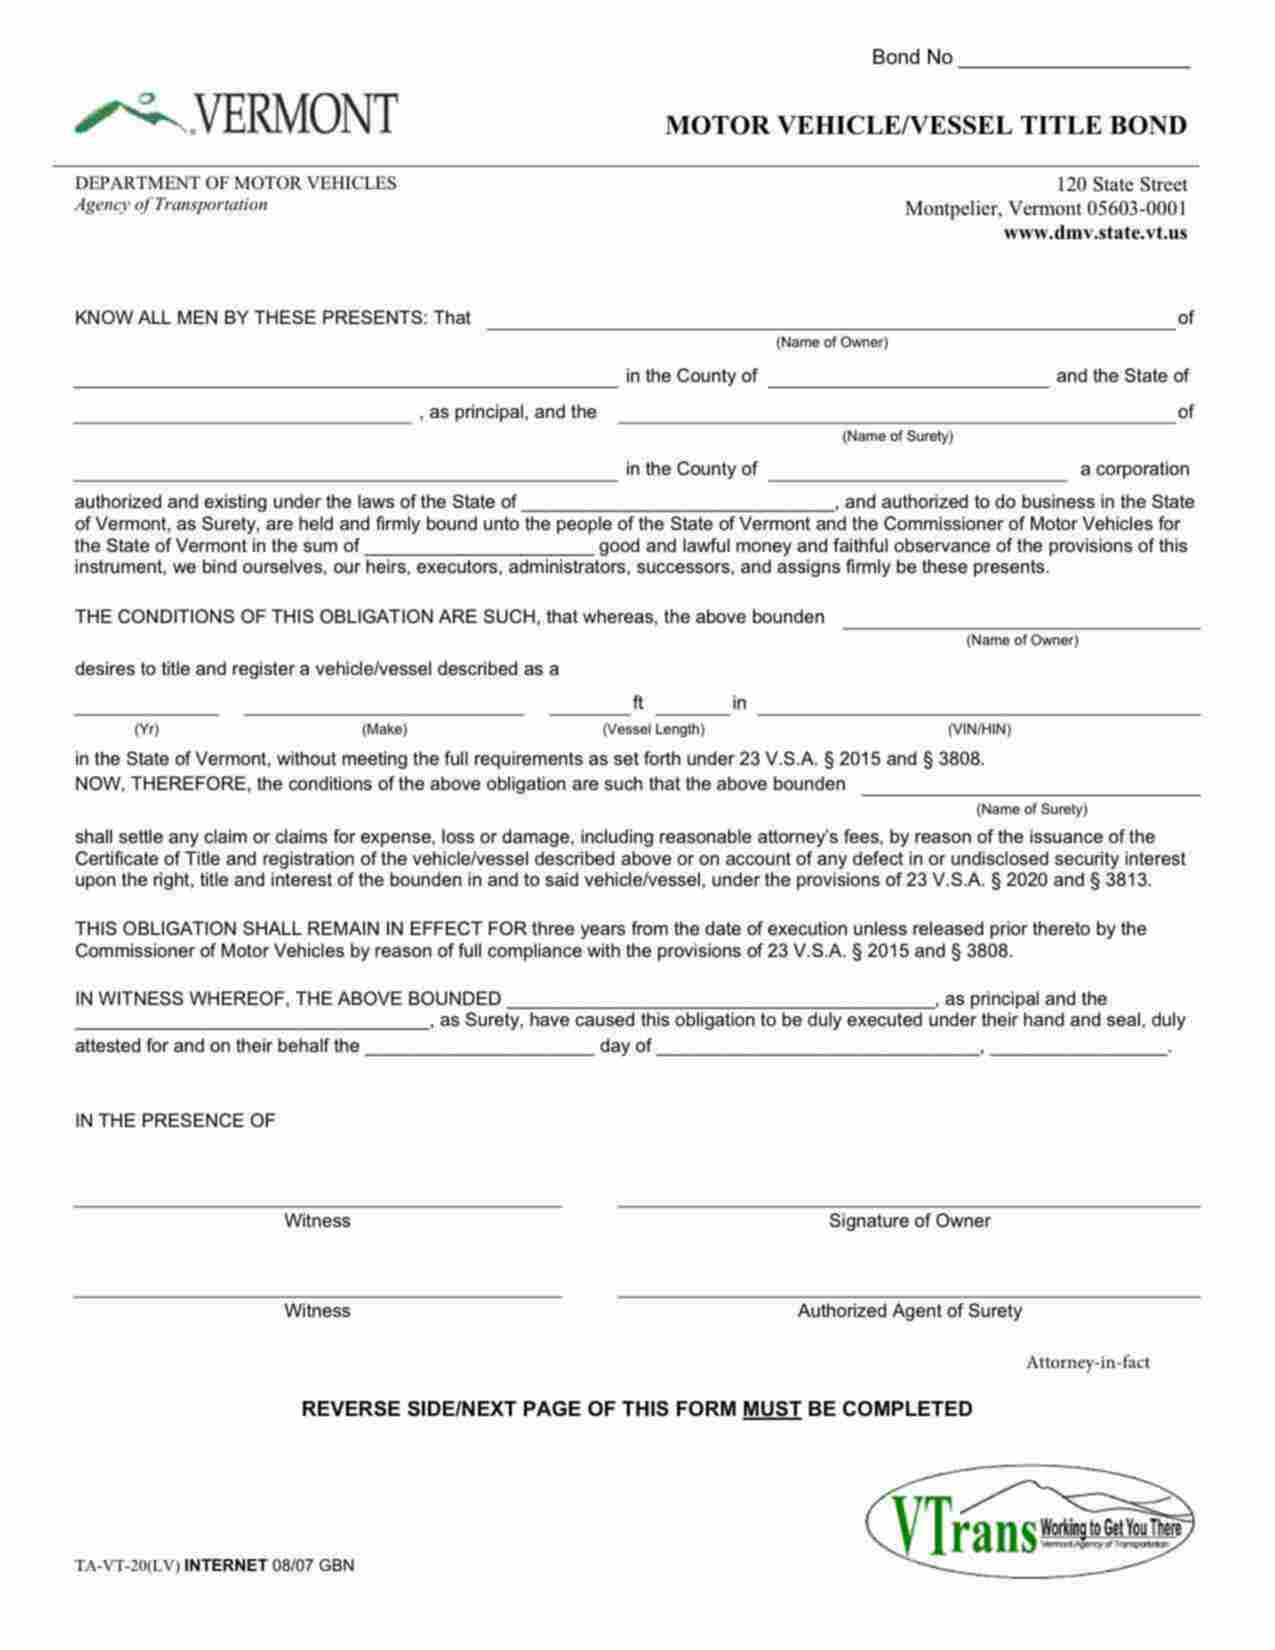 Vermont Motor Vehicle/Vessel Title Bond Form